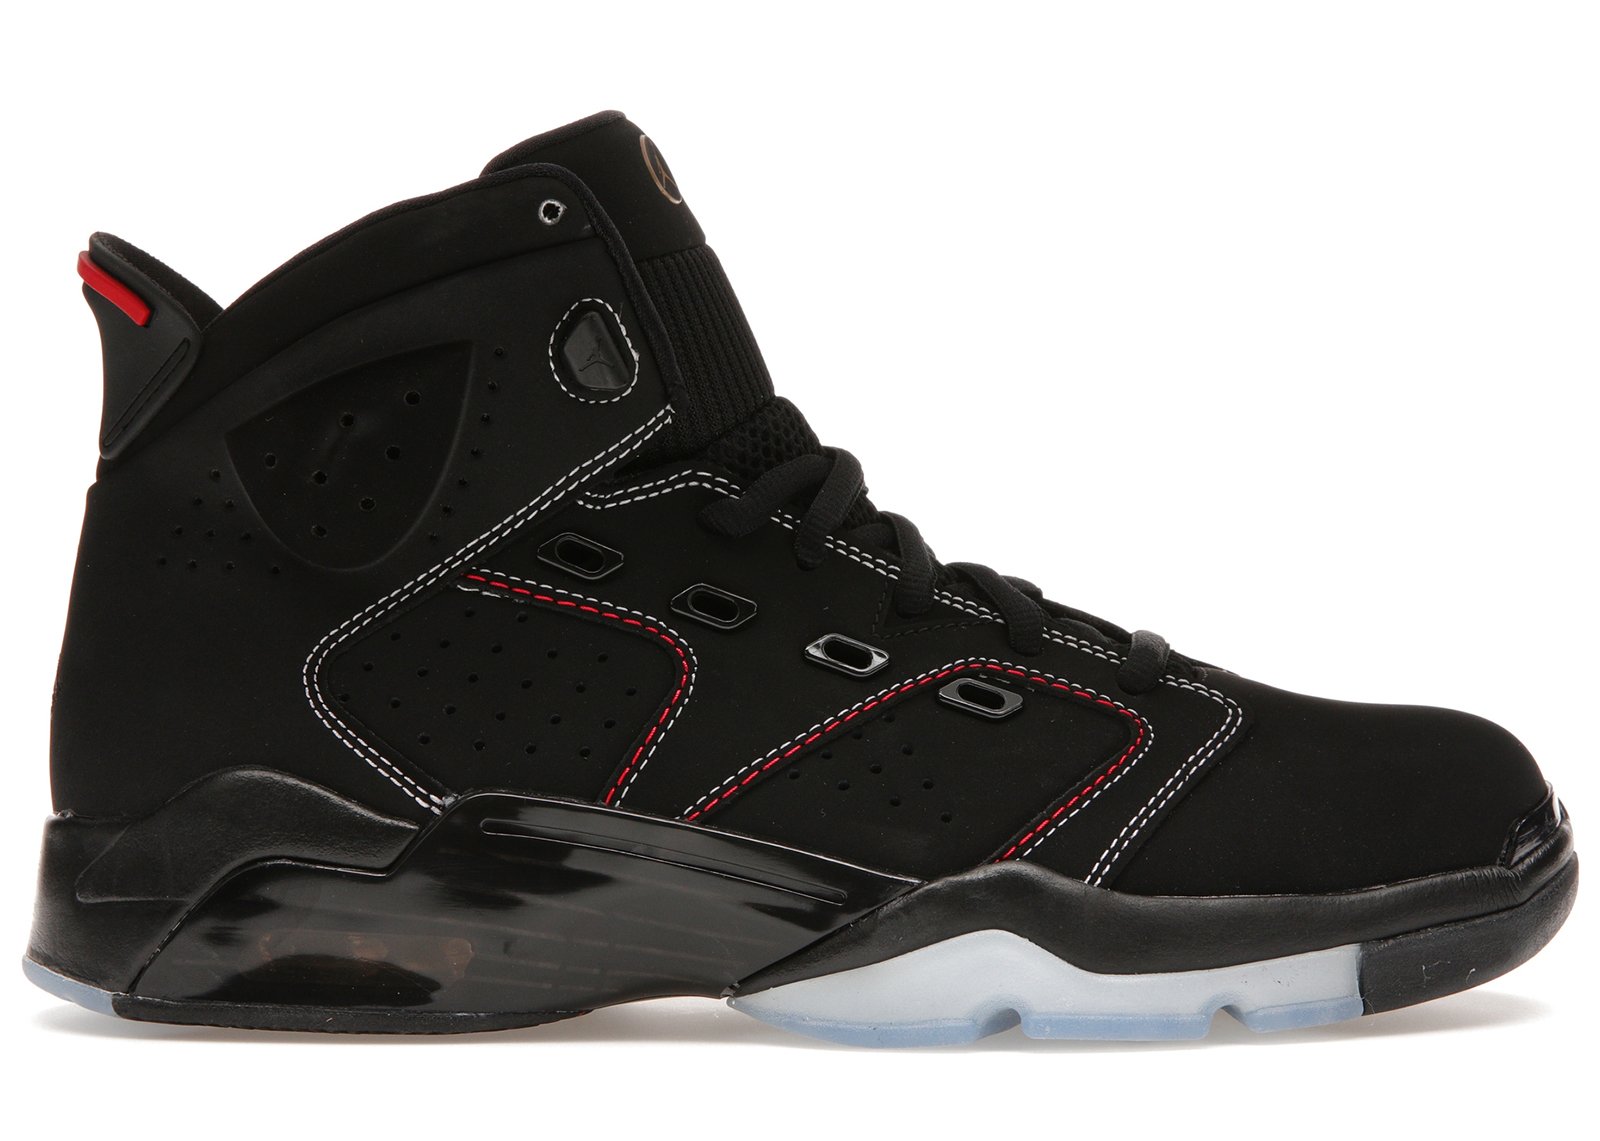 Jordan 6-17-23 Black White Red Contrast Stitching sneakers